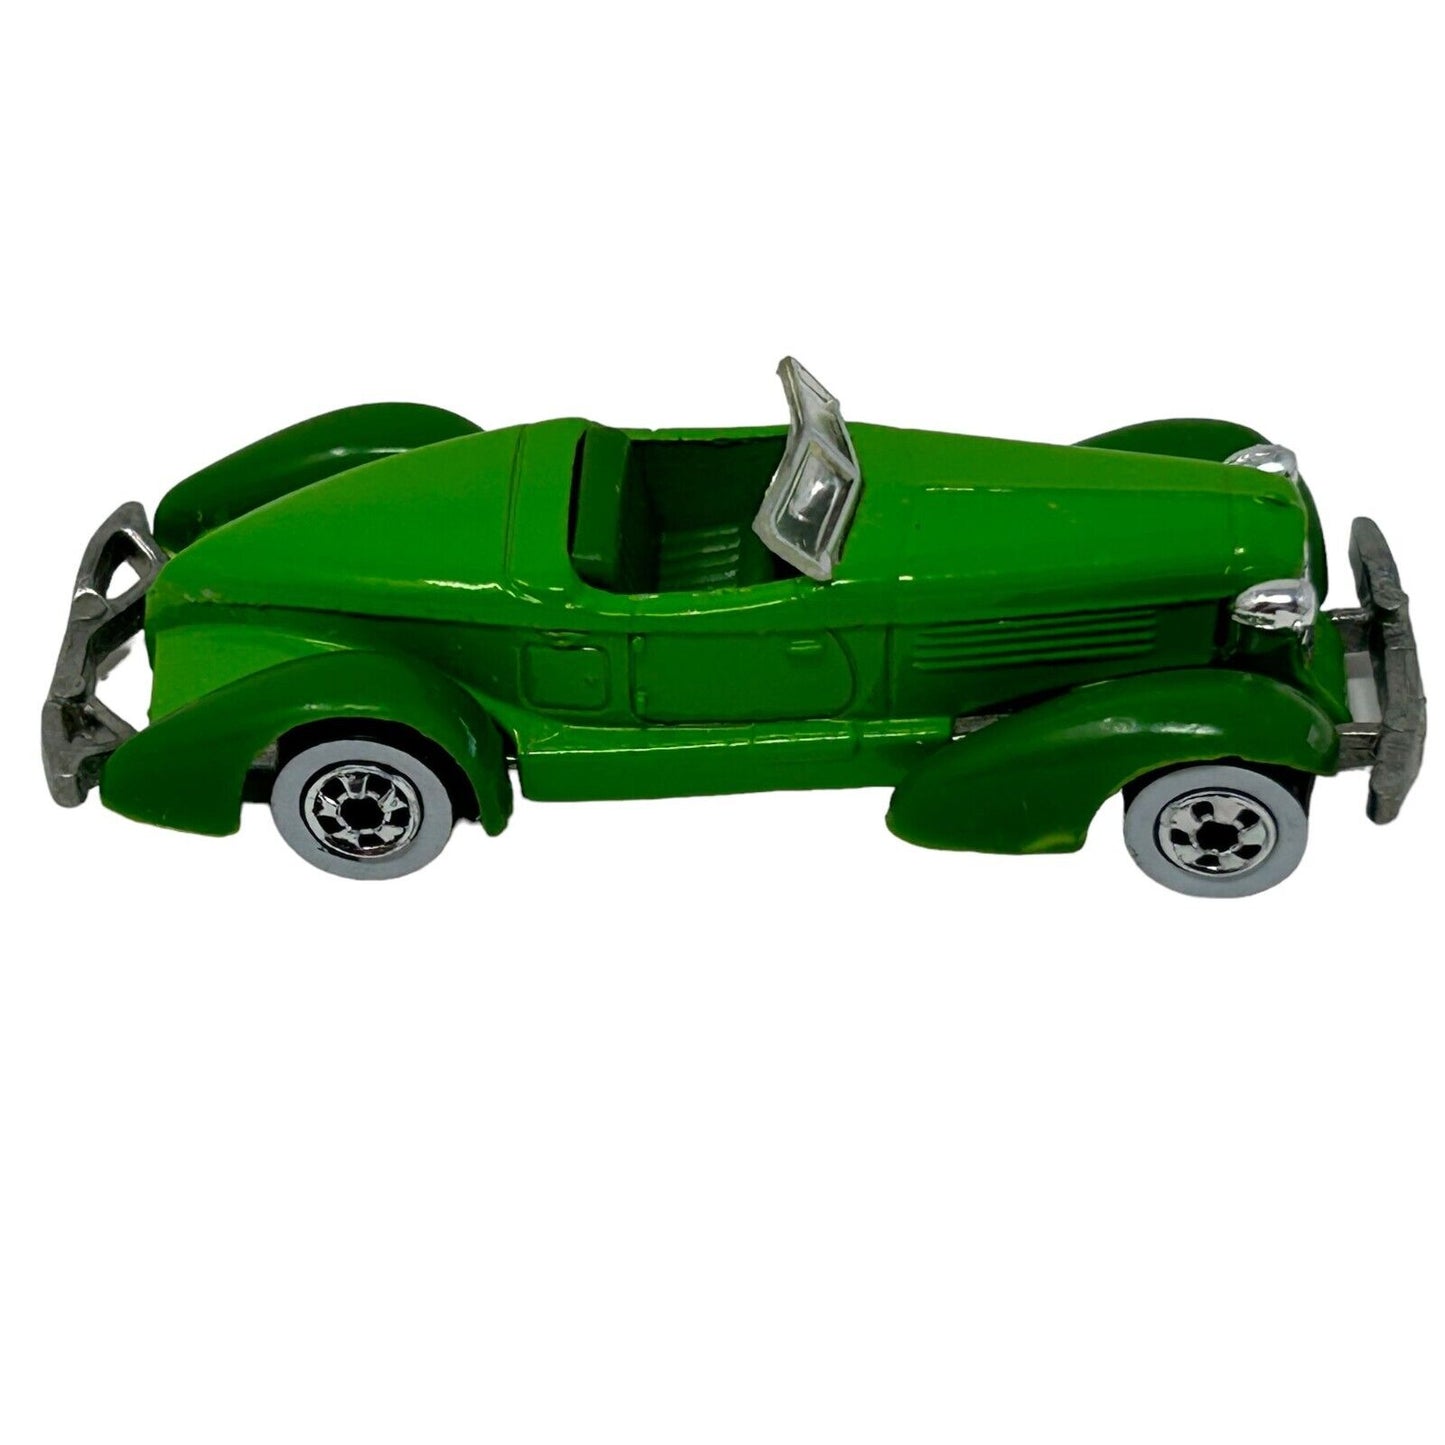 Auburn 852 Hot Wheels Collectible Diecast Car Convertible Green Vehicle Vintage